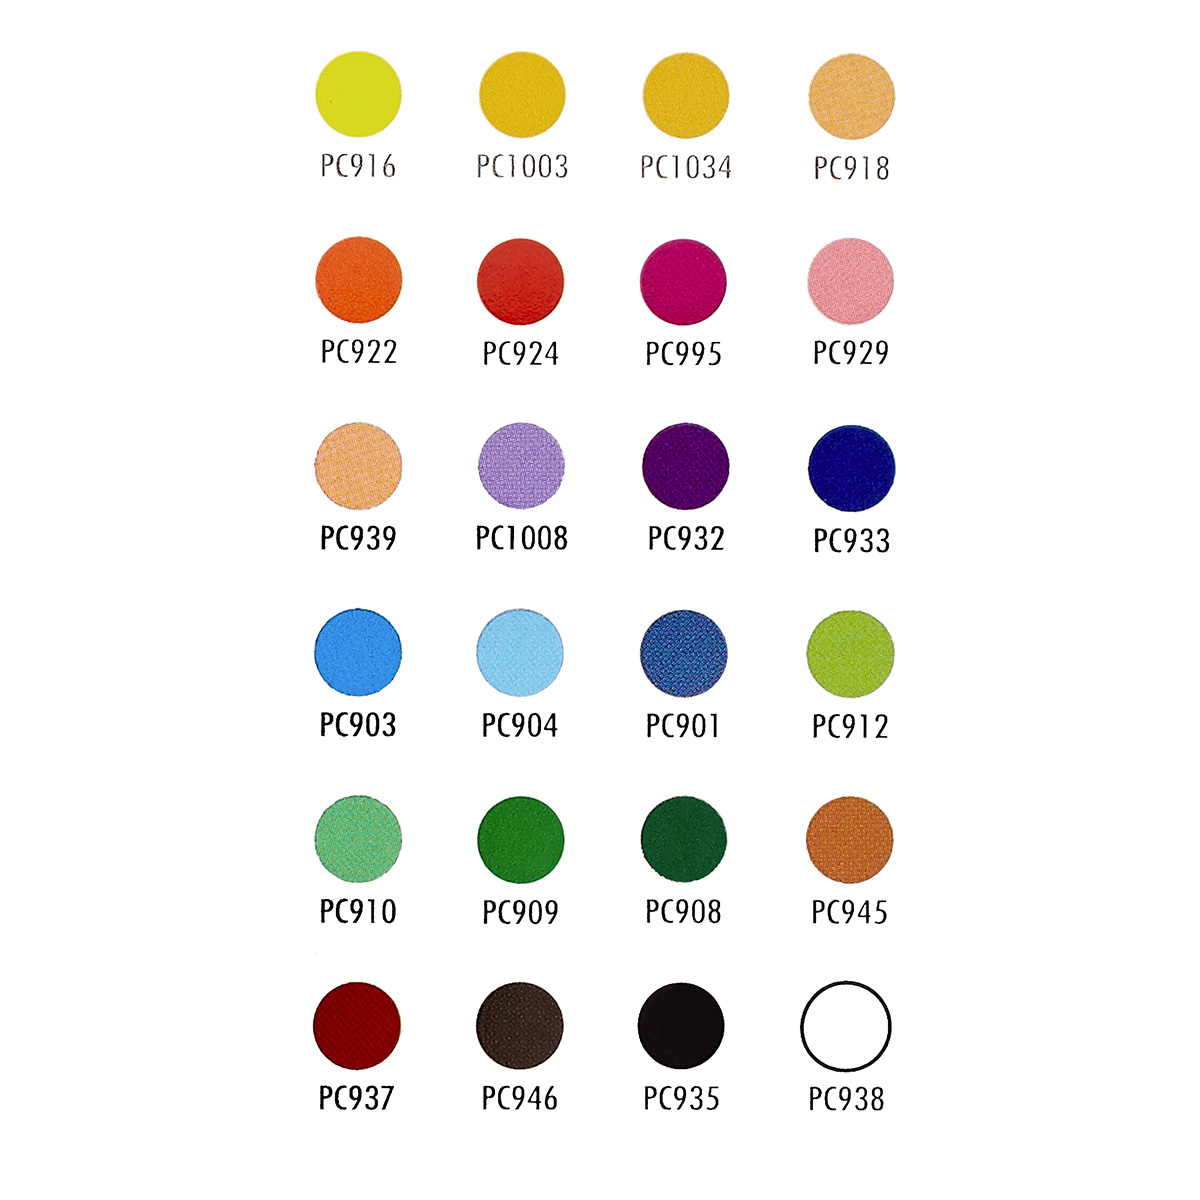 https://theinkstone.com/wp-content/uploads/2020/09/Prismacolor-Colored-Pencil-Set-24-4.jpg